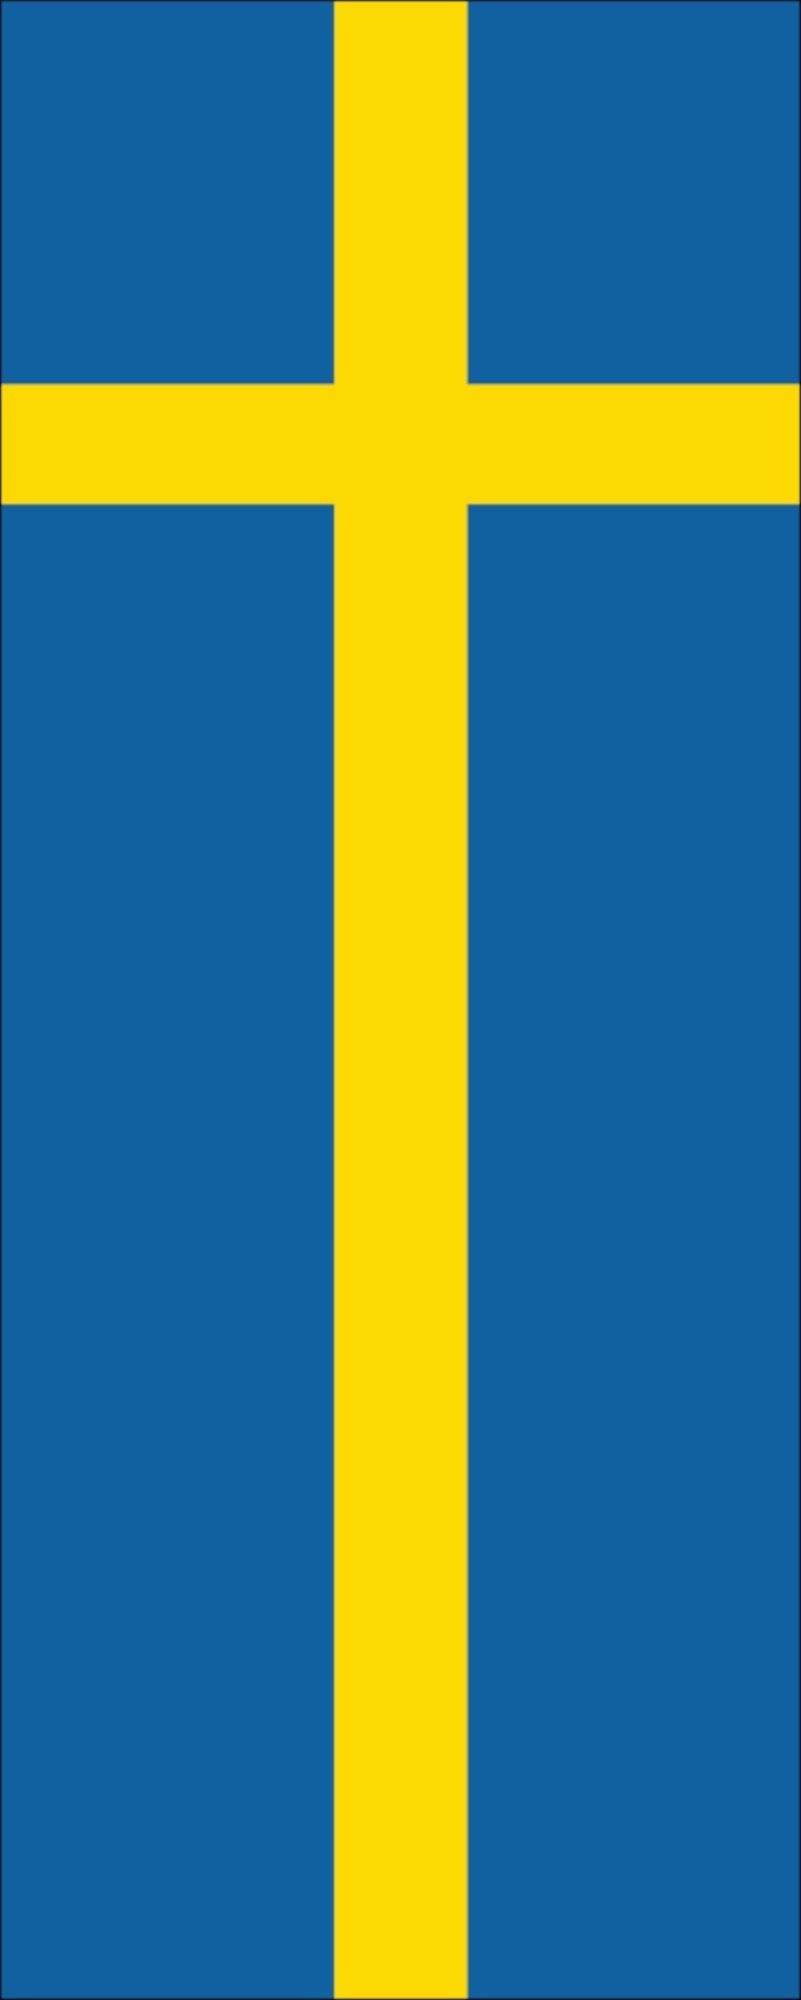 flaggenmeer Flagge Flagge Schweden 110 g/m² Hochformat